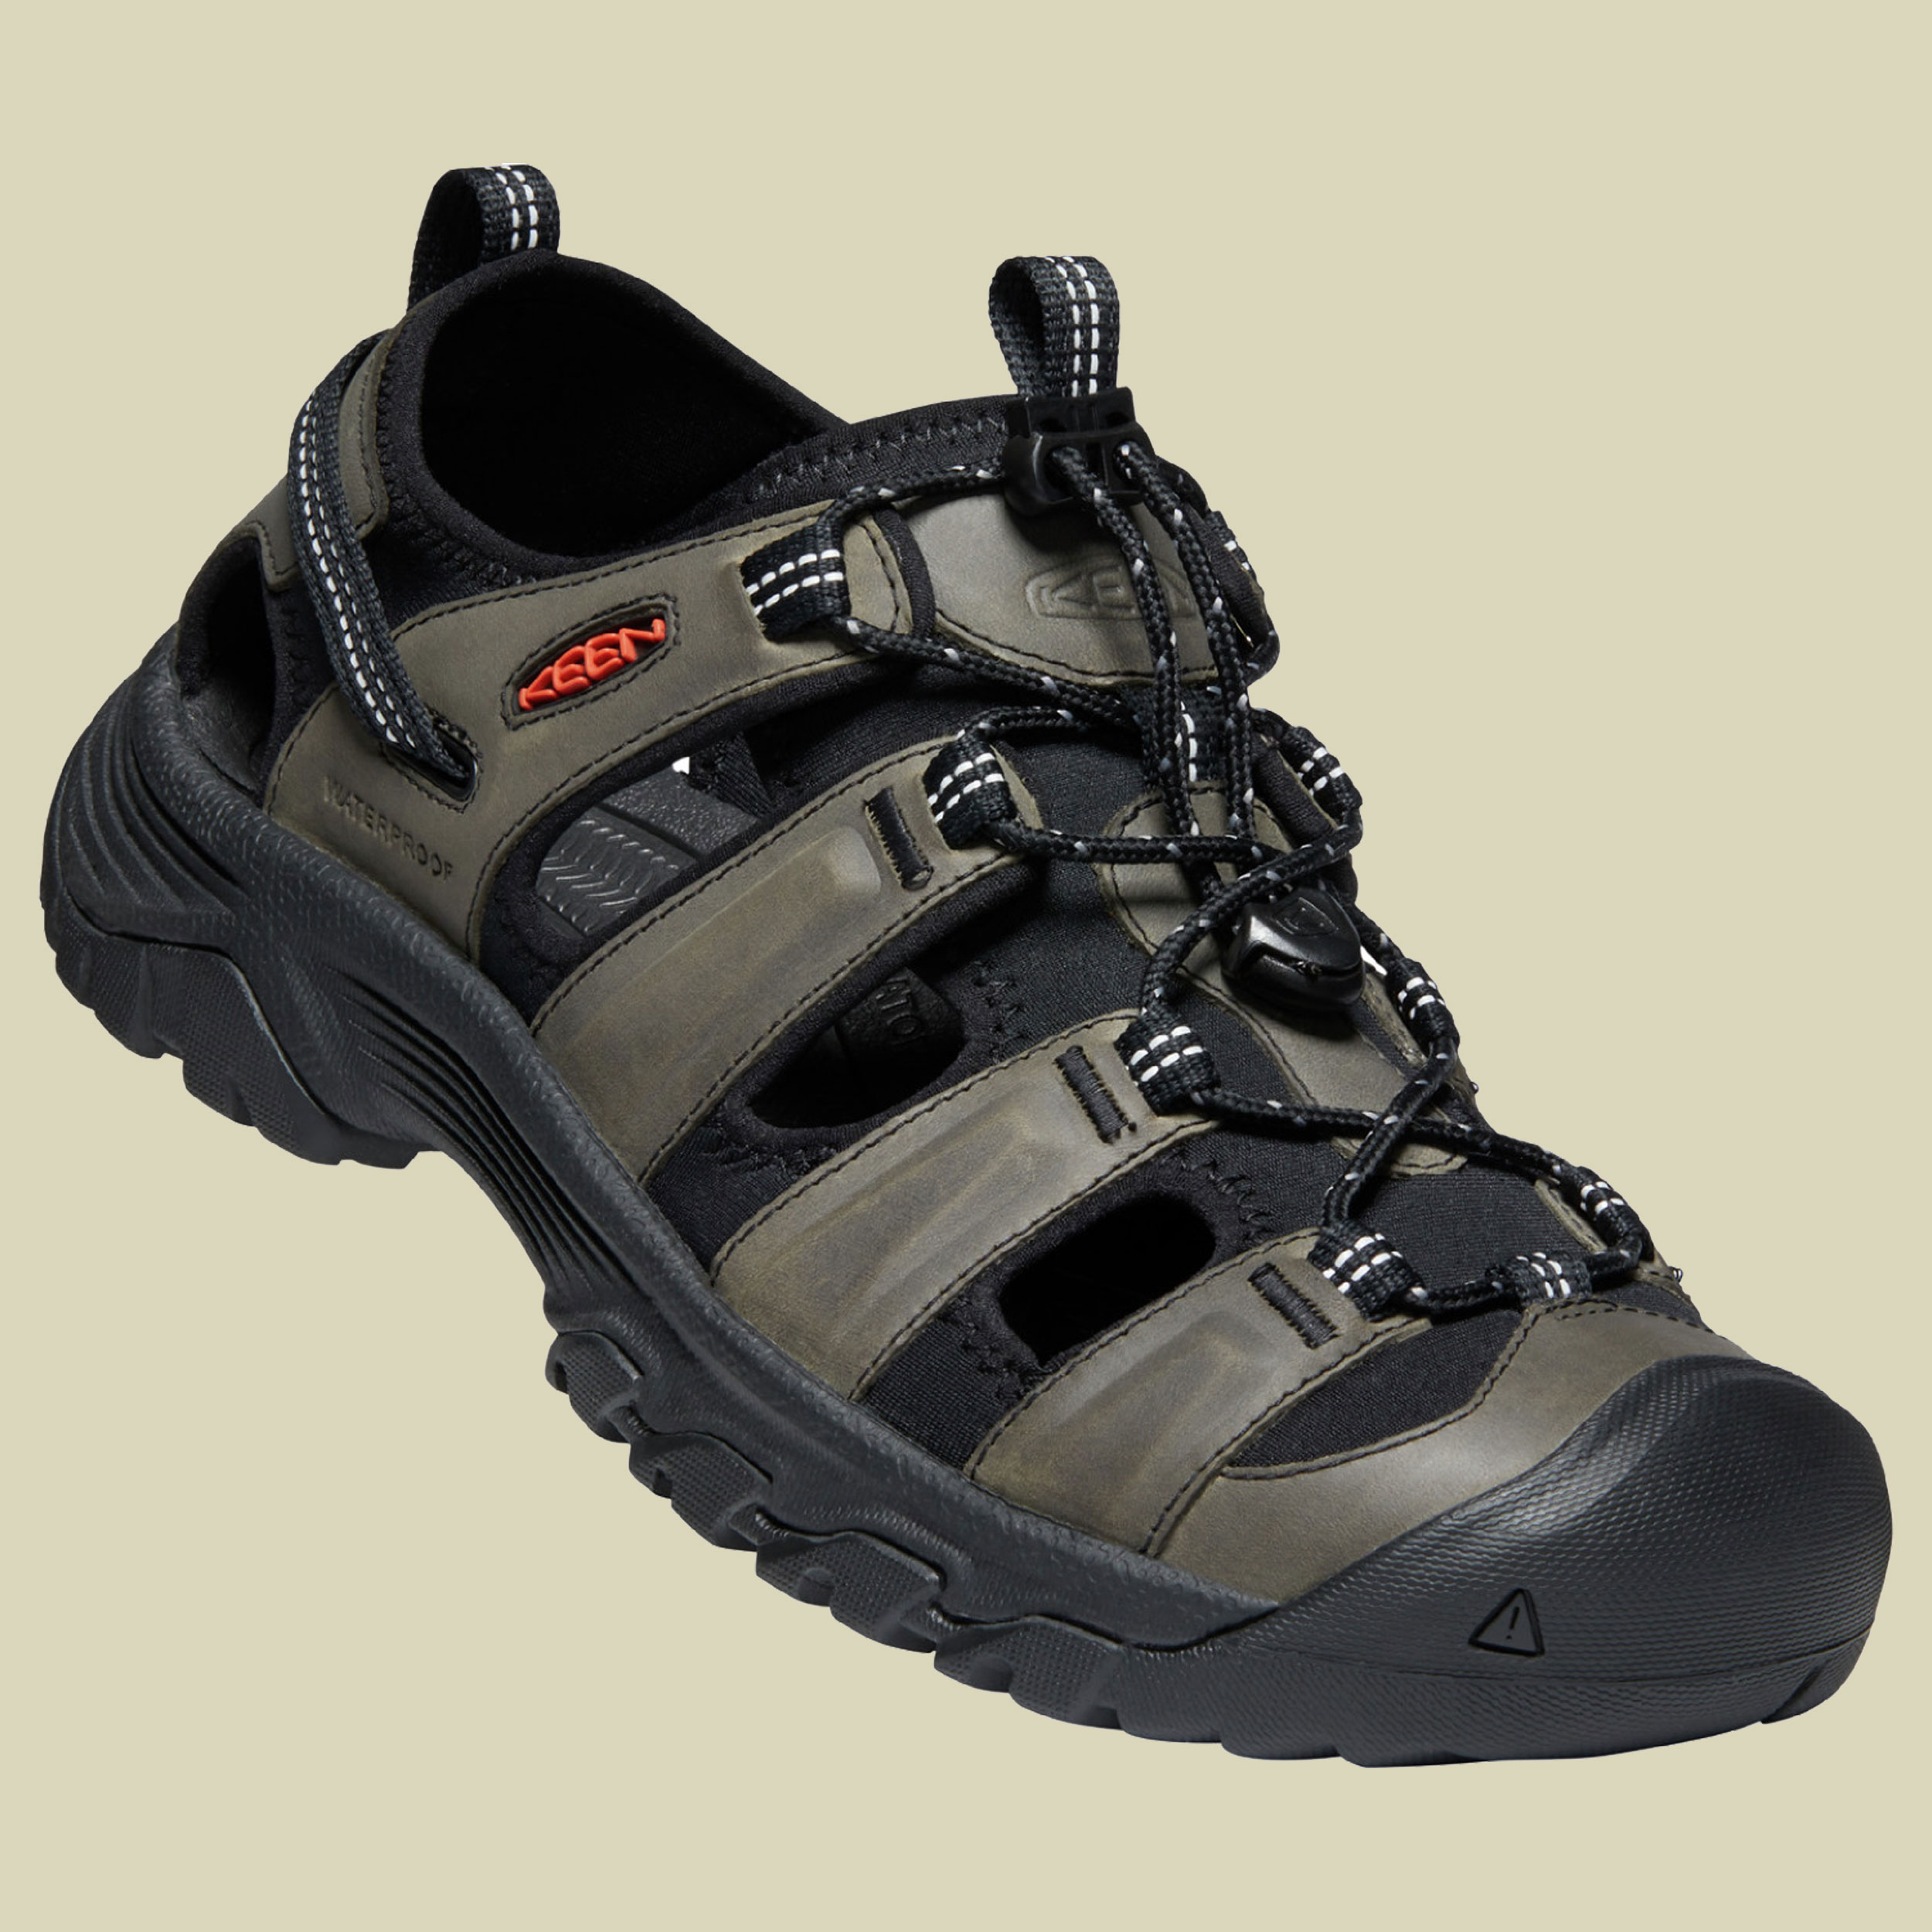 Targhee III Sandal Men Größe UK 11 Farbe grey/black